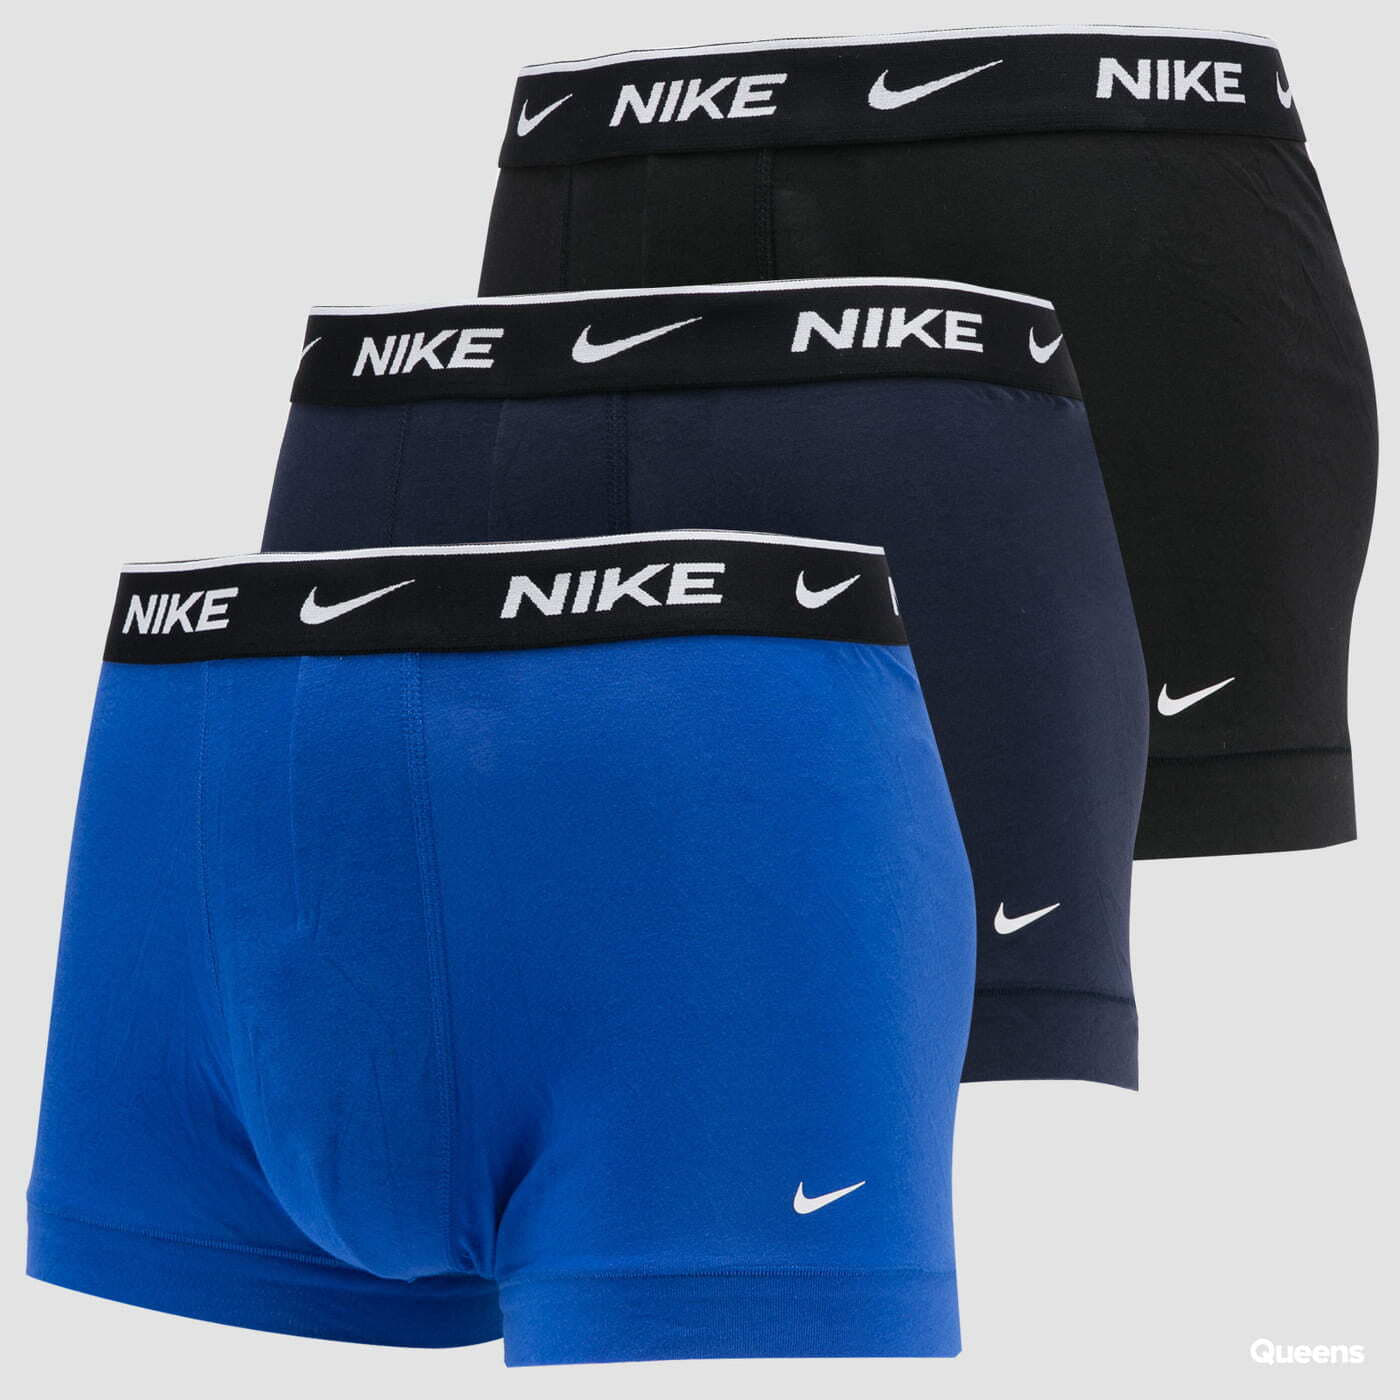 Boxer shorts Nike Trunk 3Pack C/O Navy/ Blue/ Black